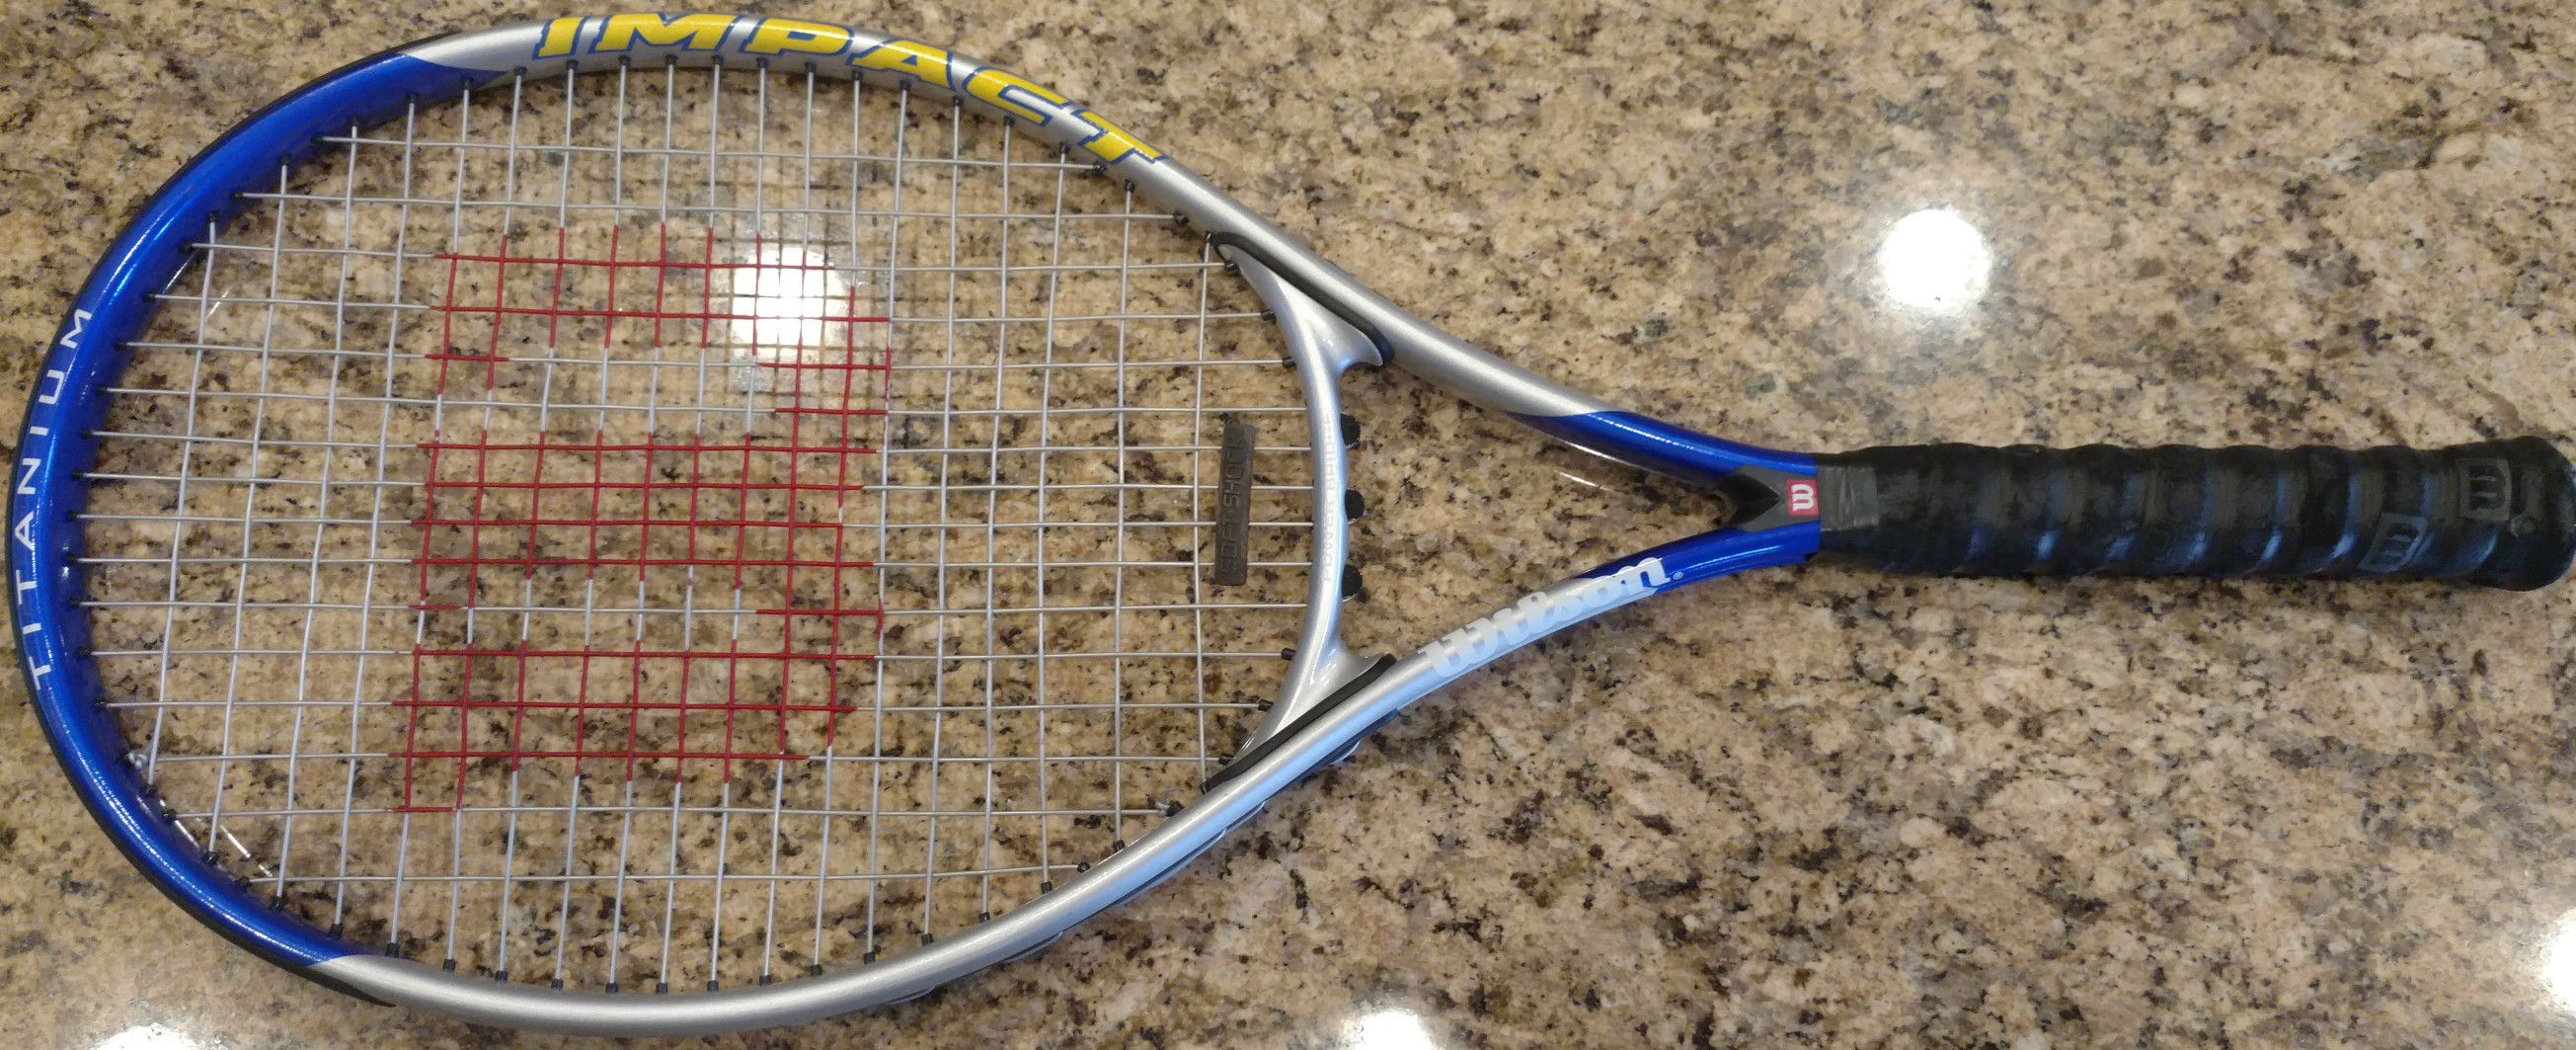 Tennis Racket - Titanium, LIKE-NEW! (Wilson)